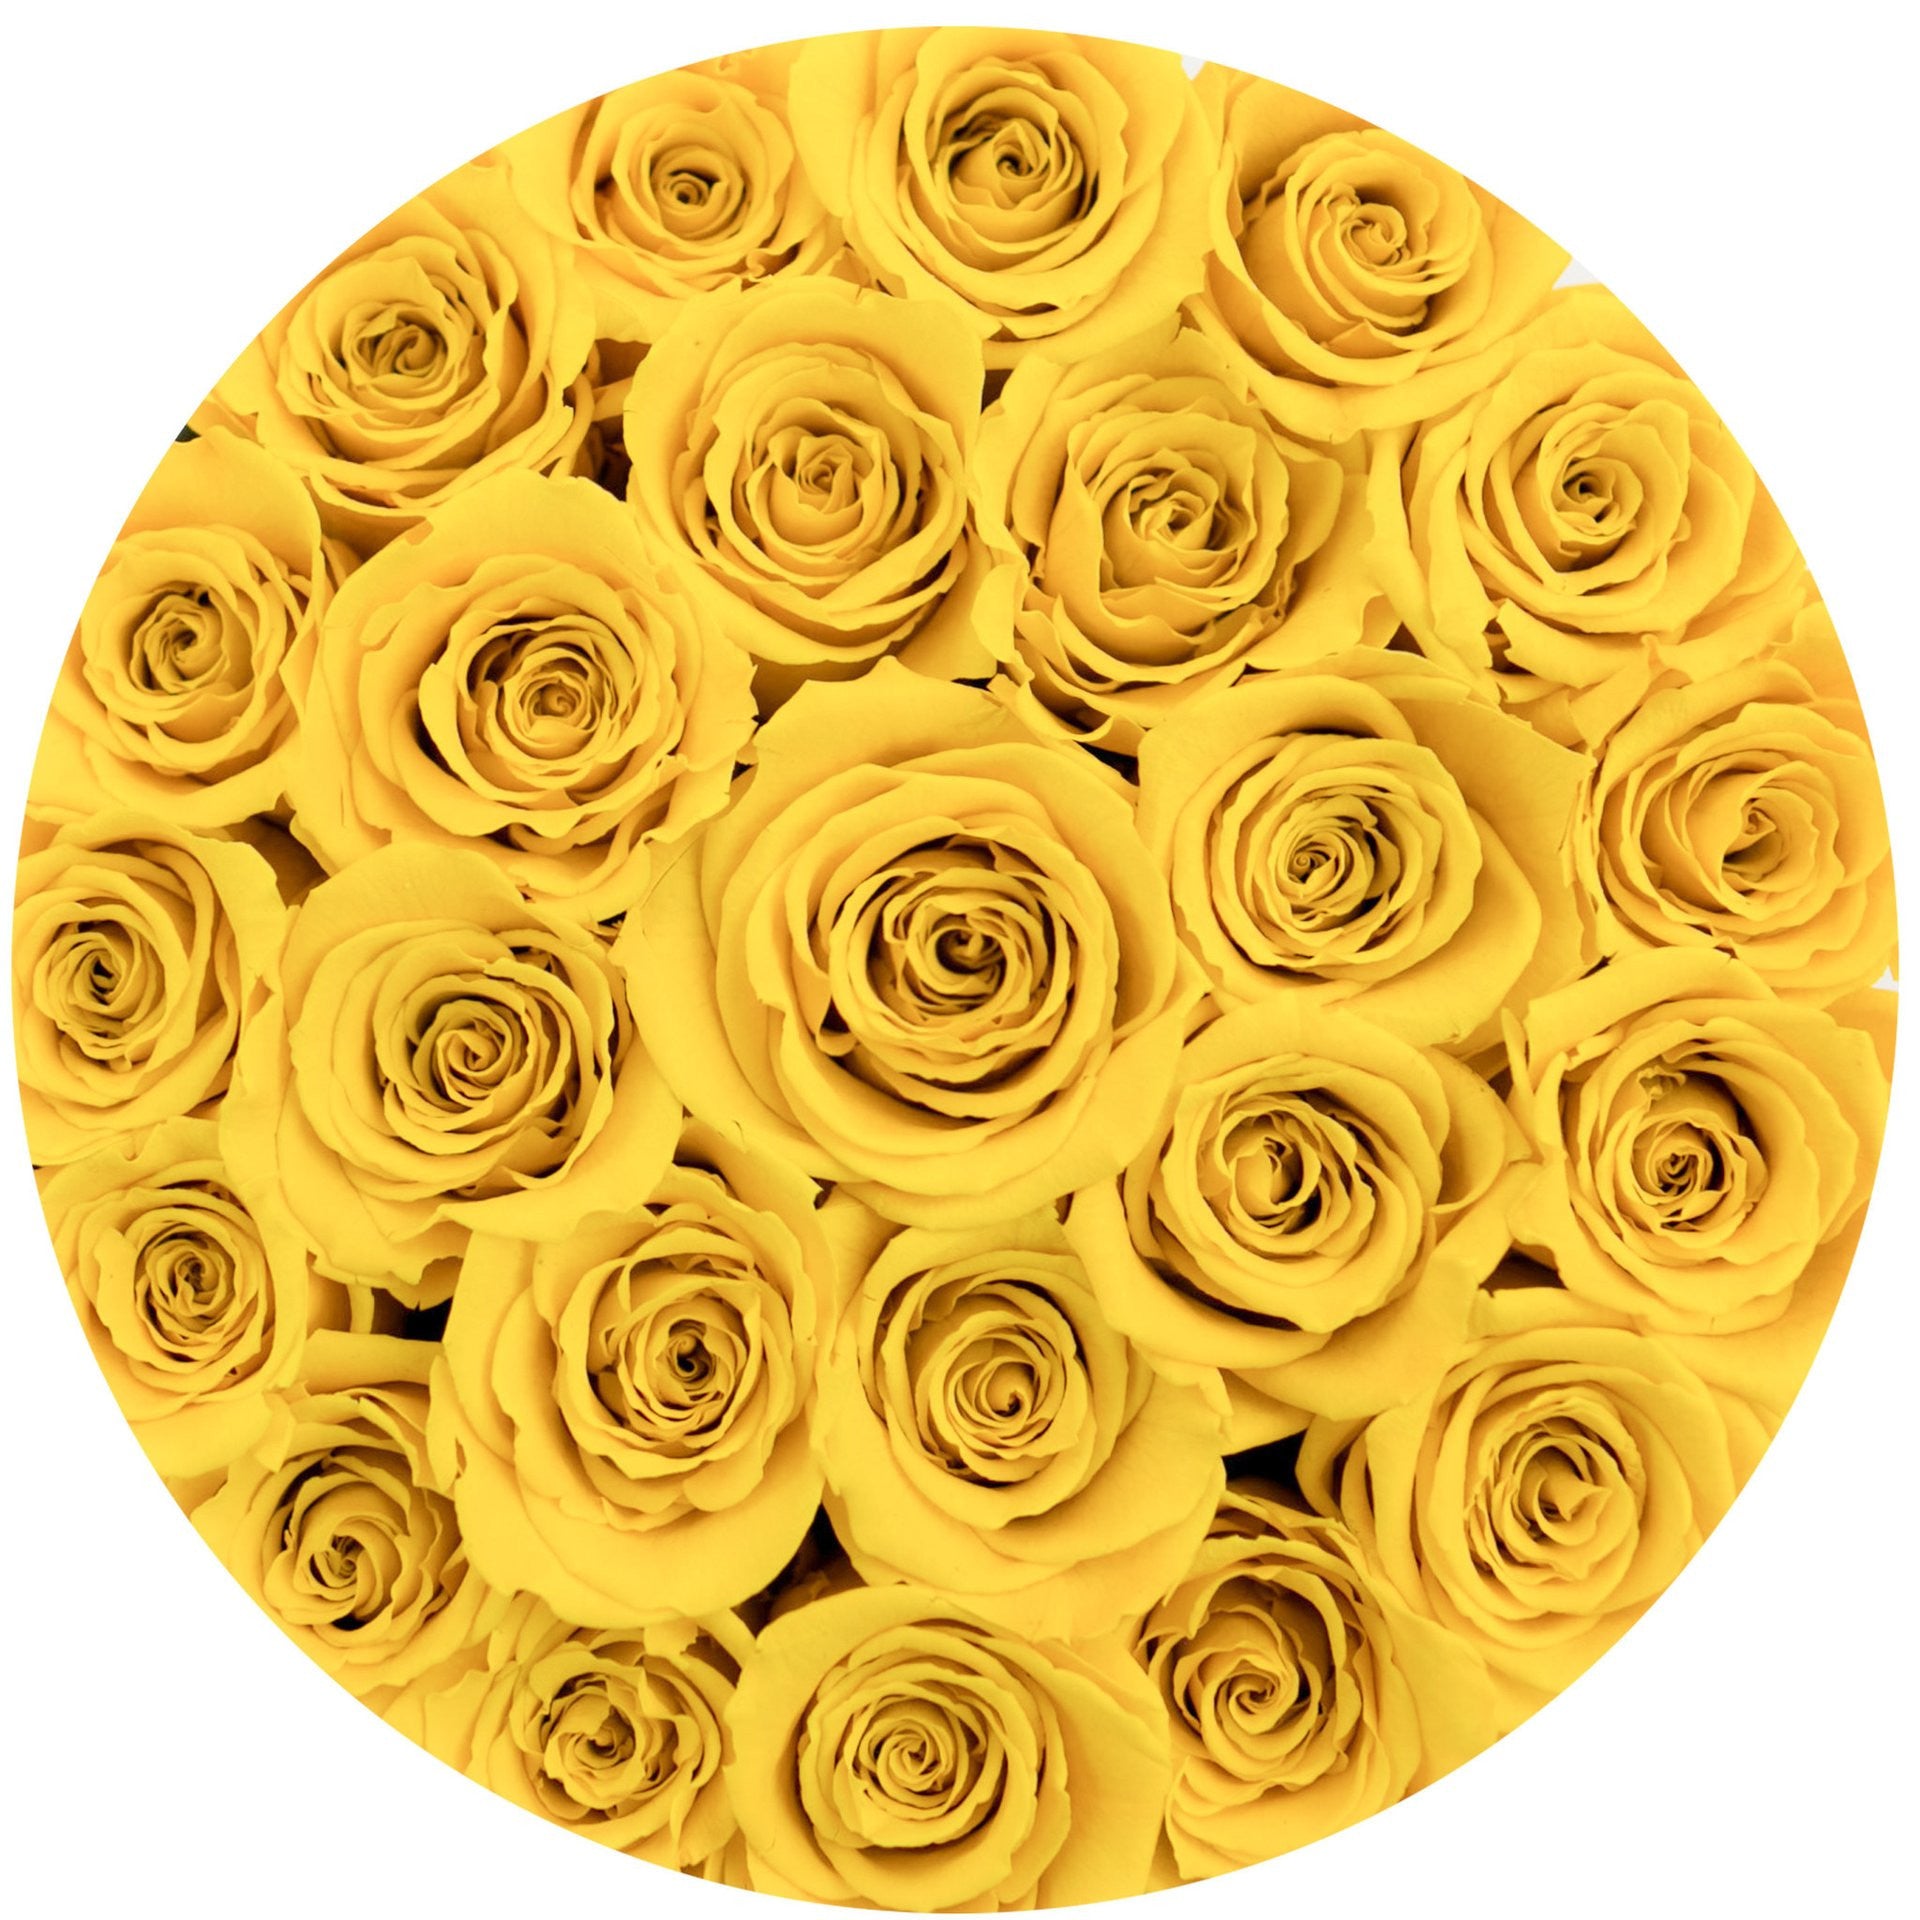 Aranjament floral cu trandafiri naturali galbeni în cutie mică